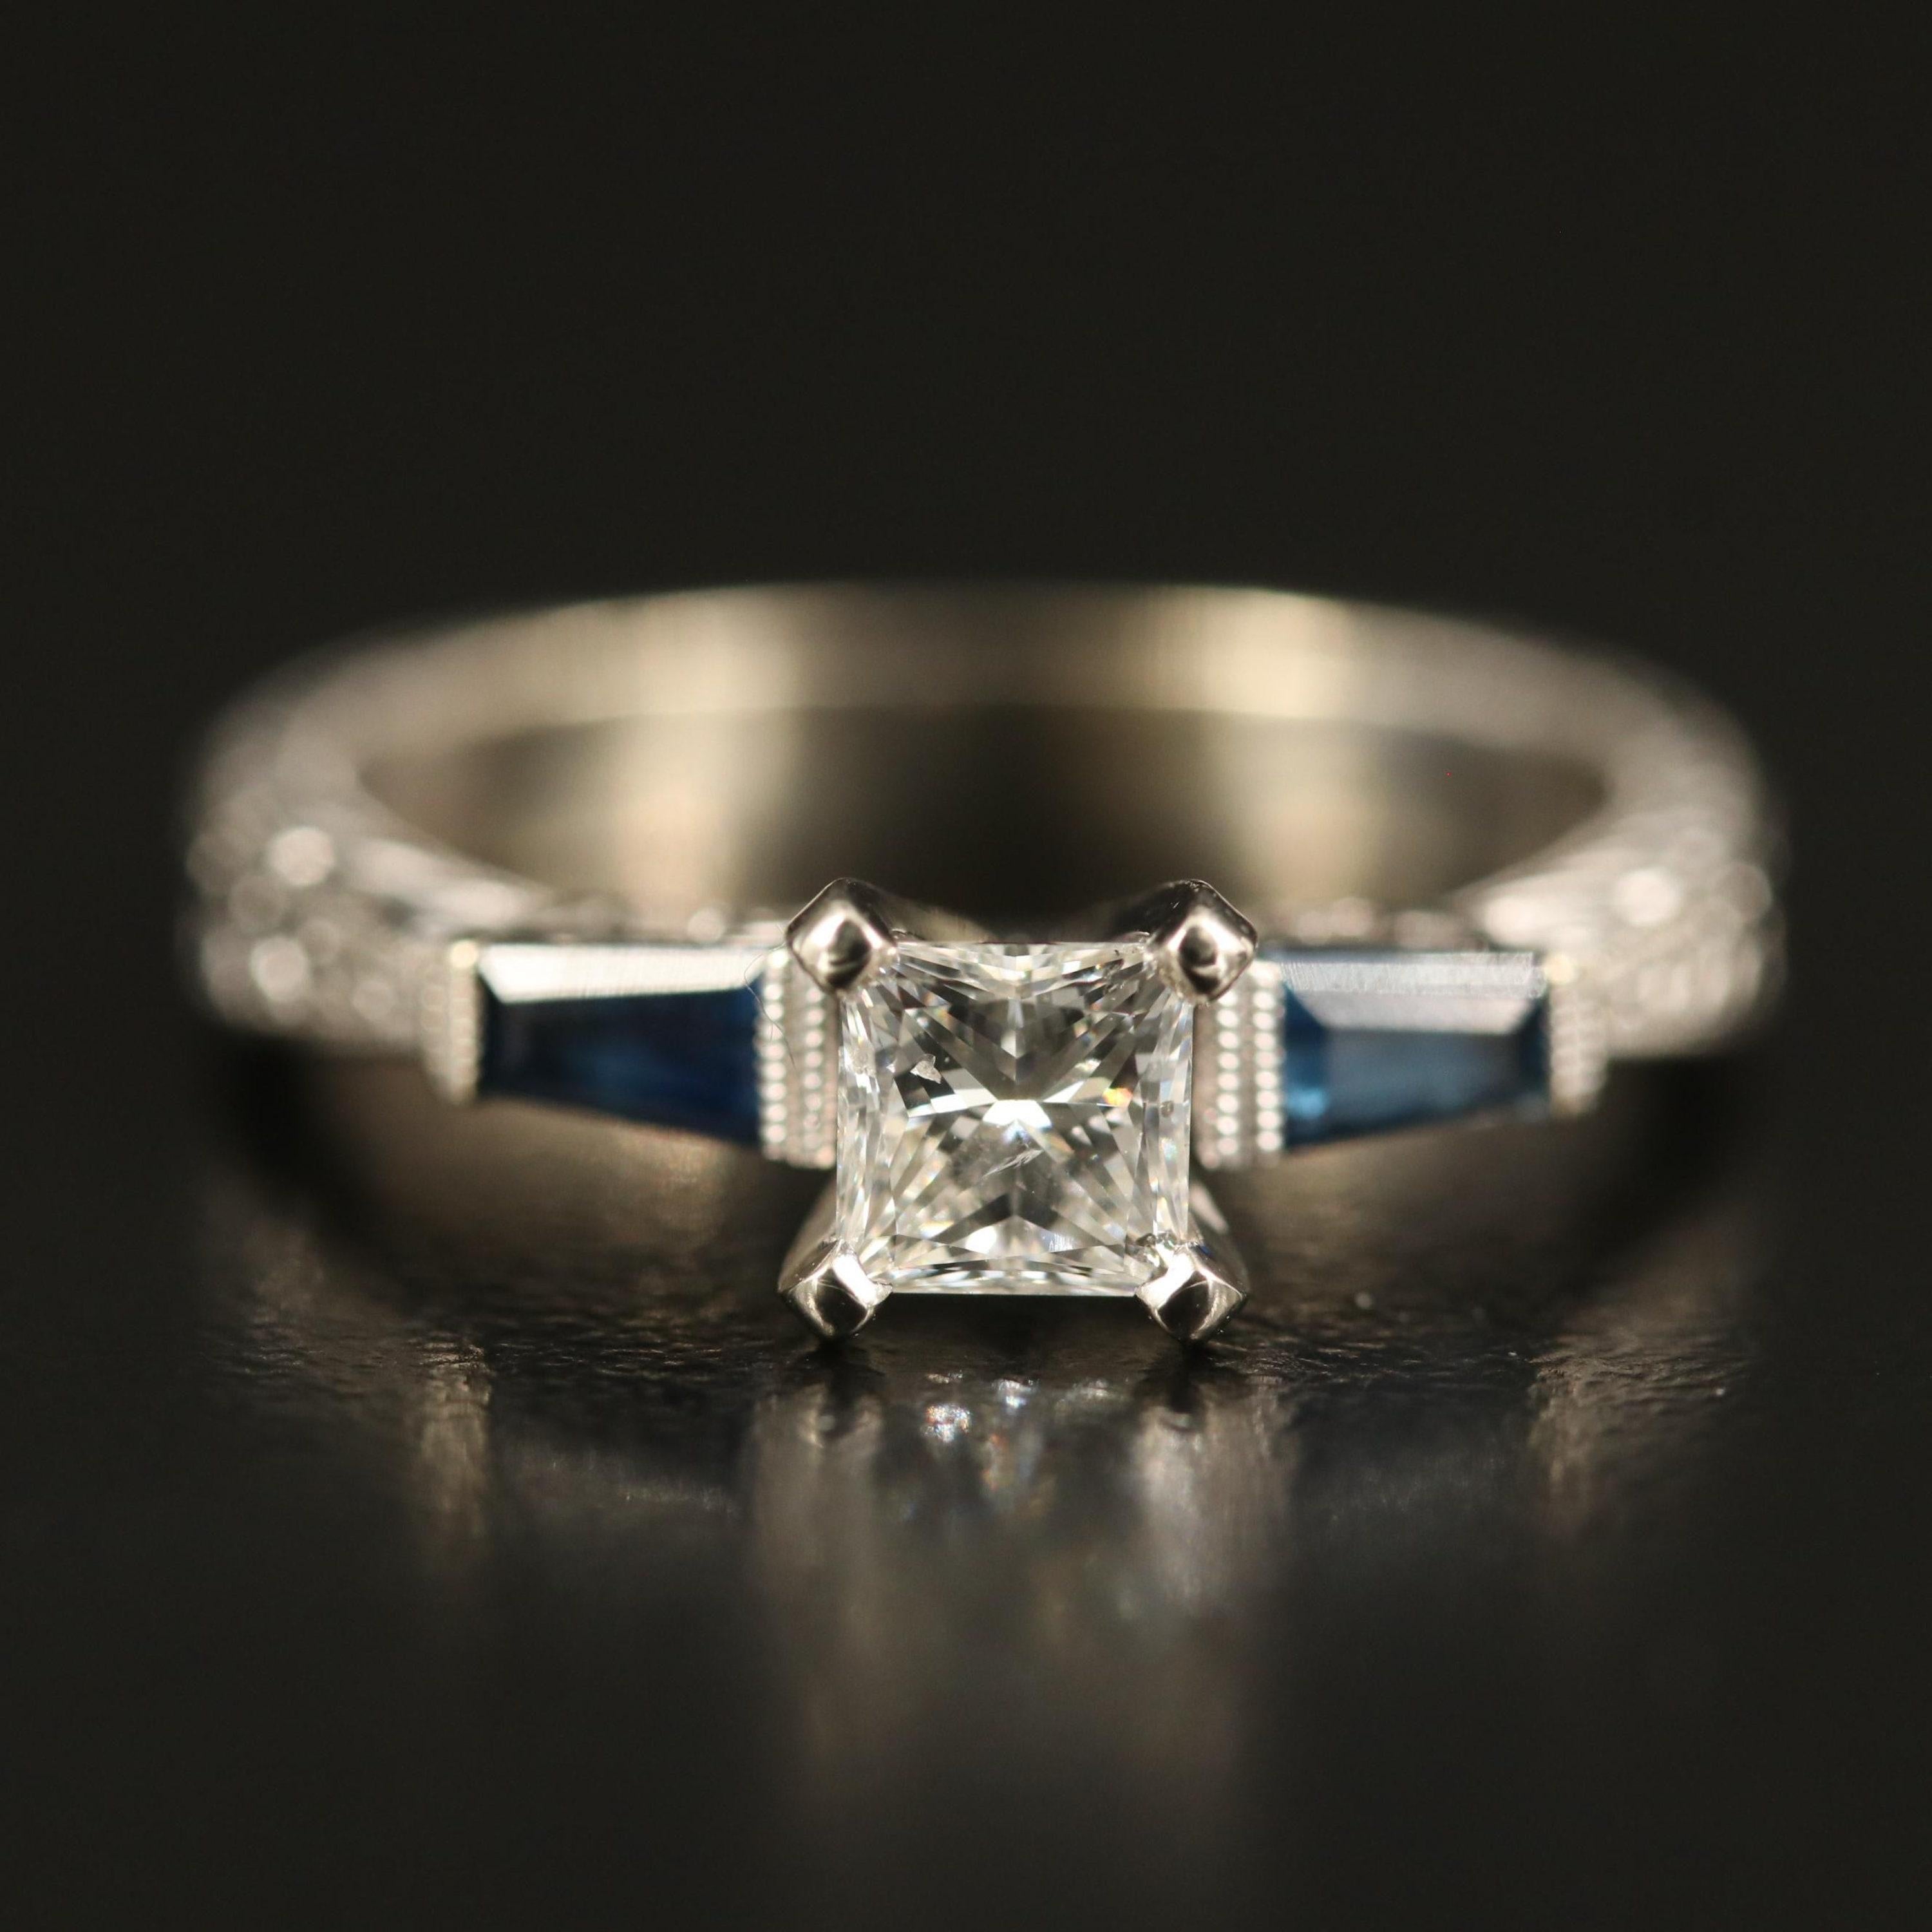 For Sale:  Vintage 1.23 Carat Princess Cut Diamond Sapphire Bridal Ring Set in 18K Gold 5